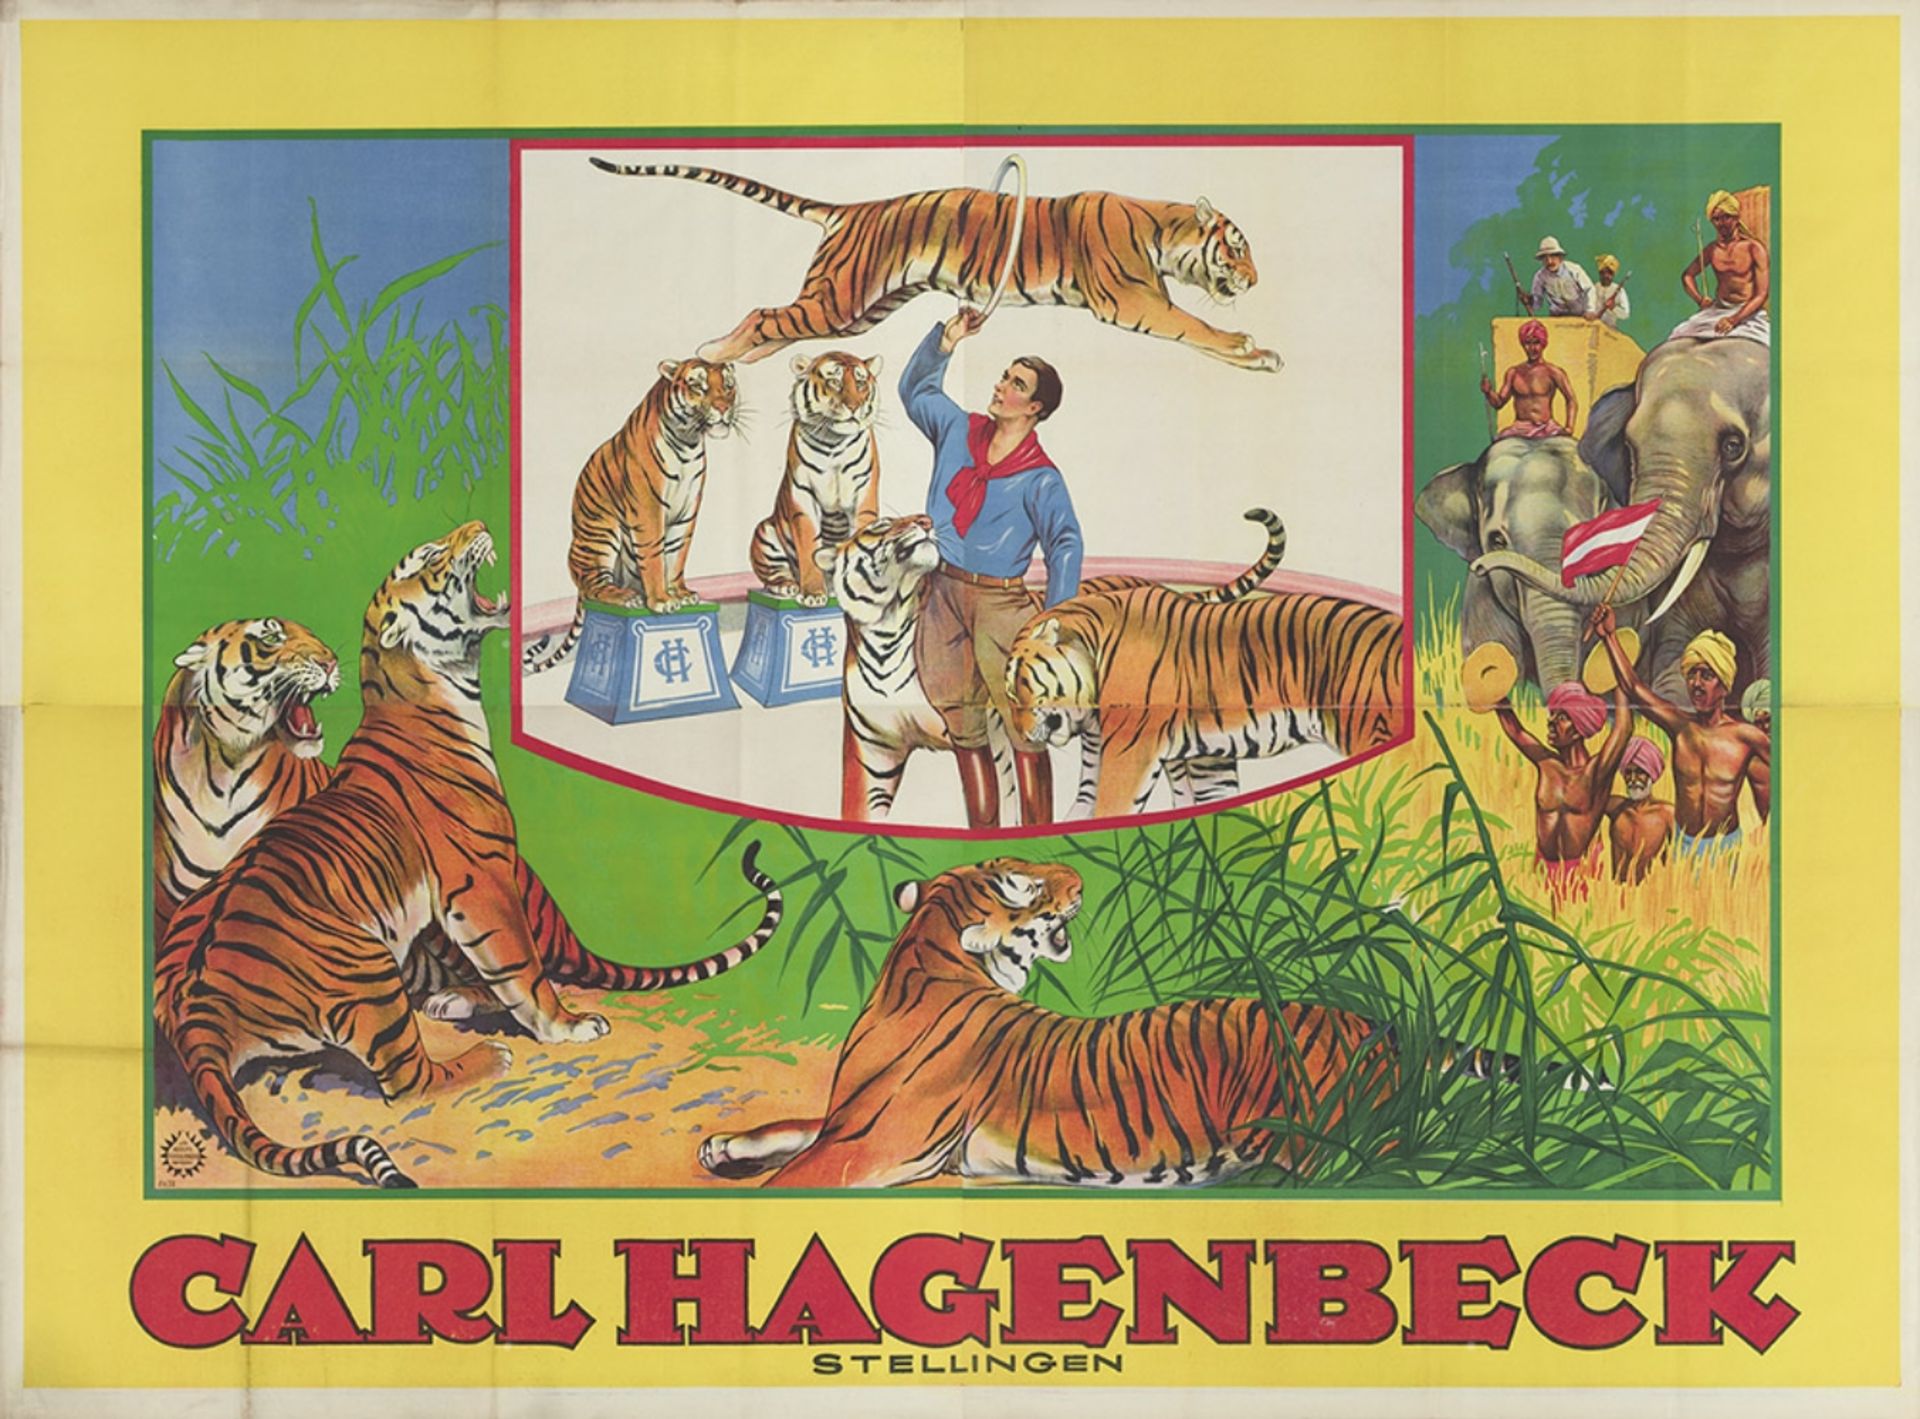 [Tigers/Elephants] Circus Hagenbeck. "Tiger jumping through a hoop" Friedländer, Hamburg, 1929